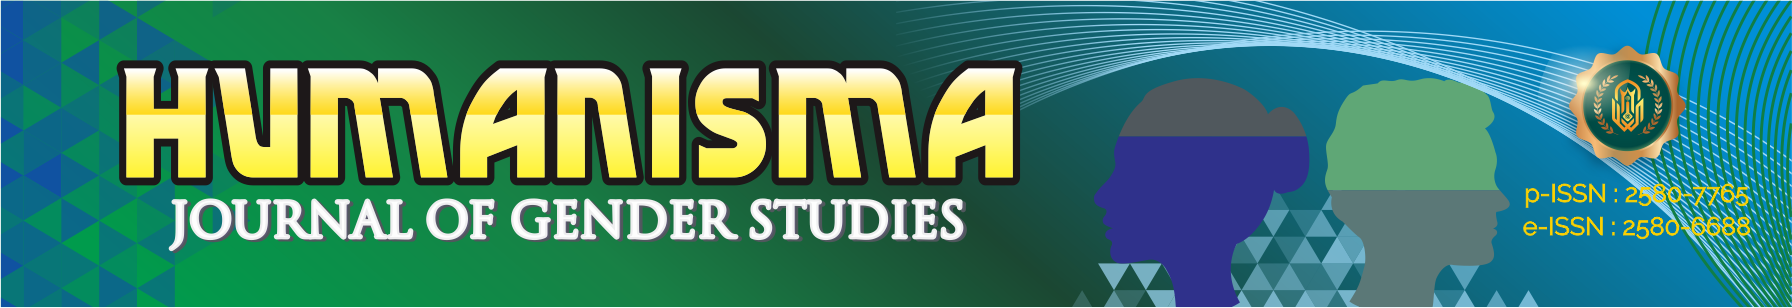 Humanisma : Journal of Gender Studies